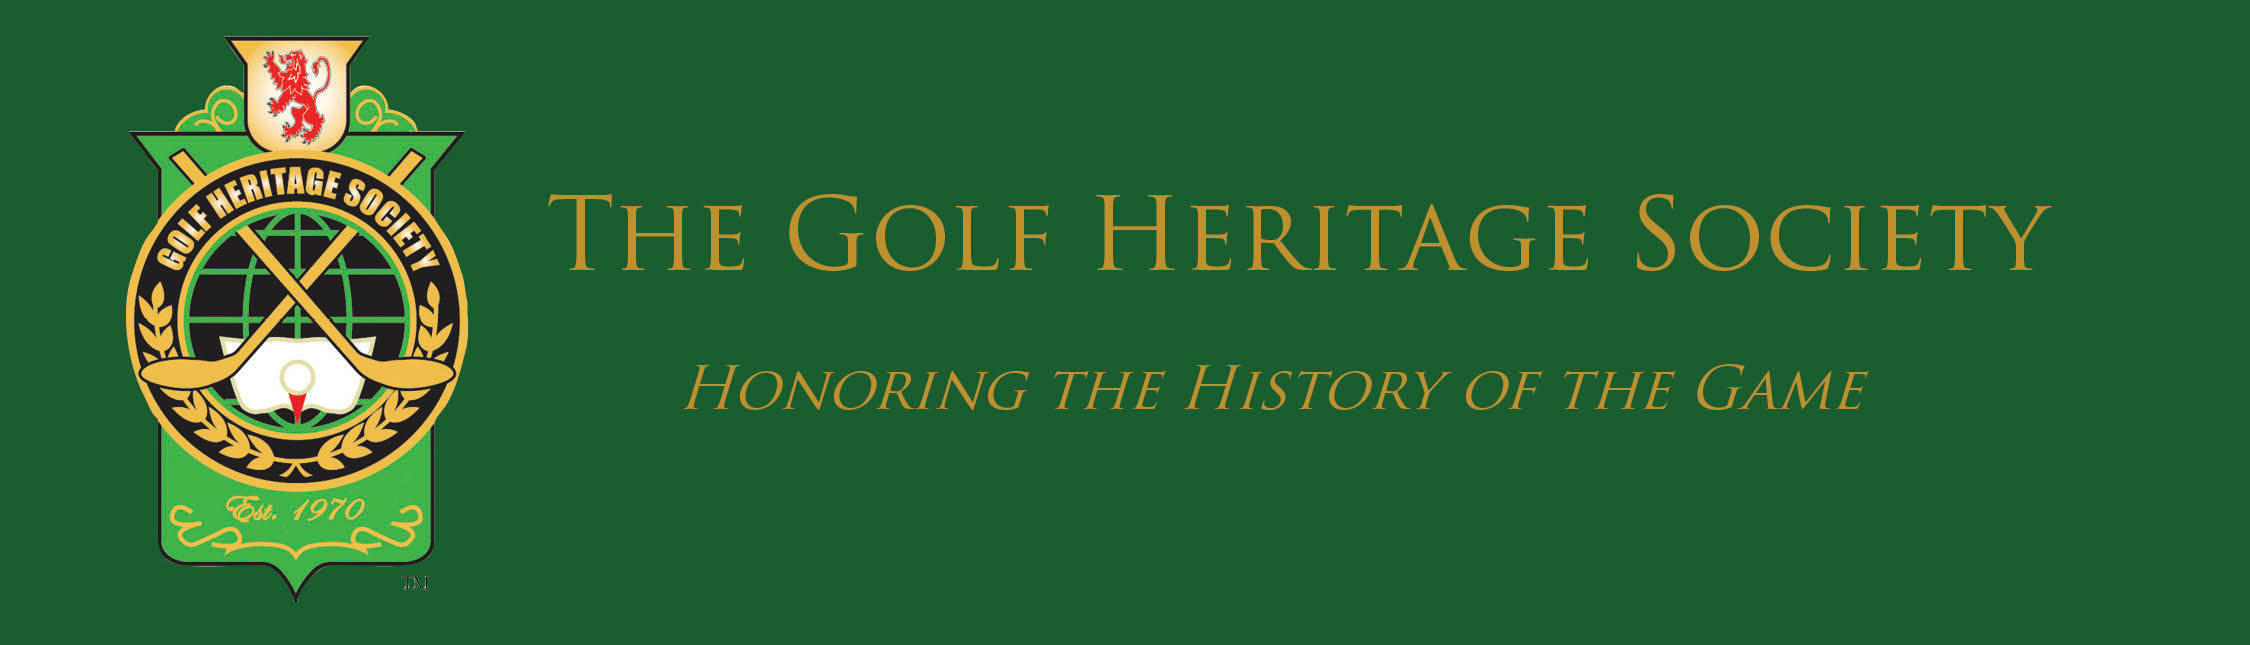 The Golf Heritage Society